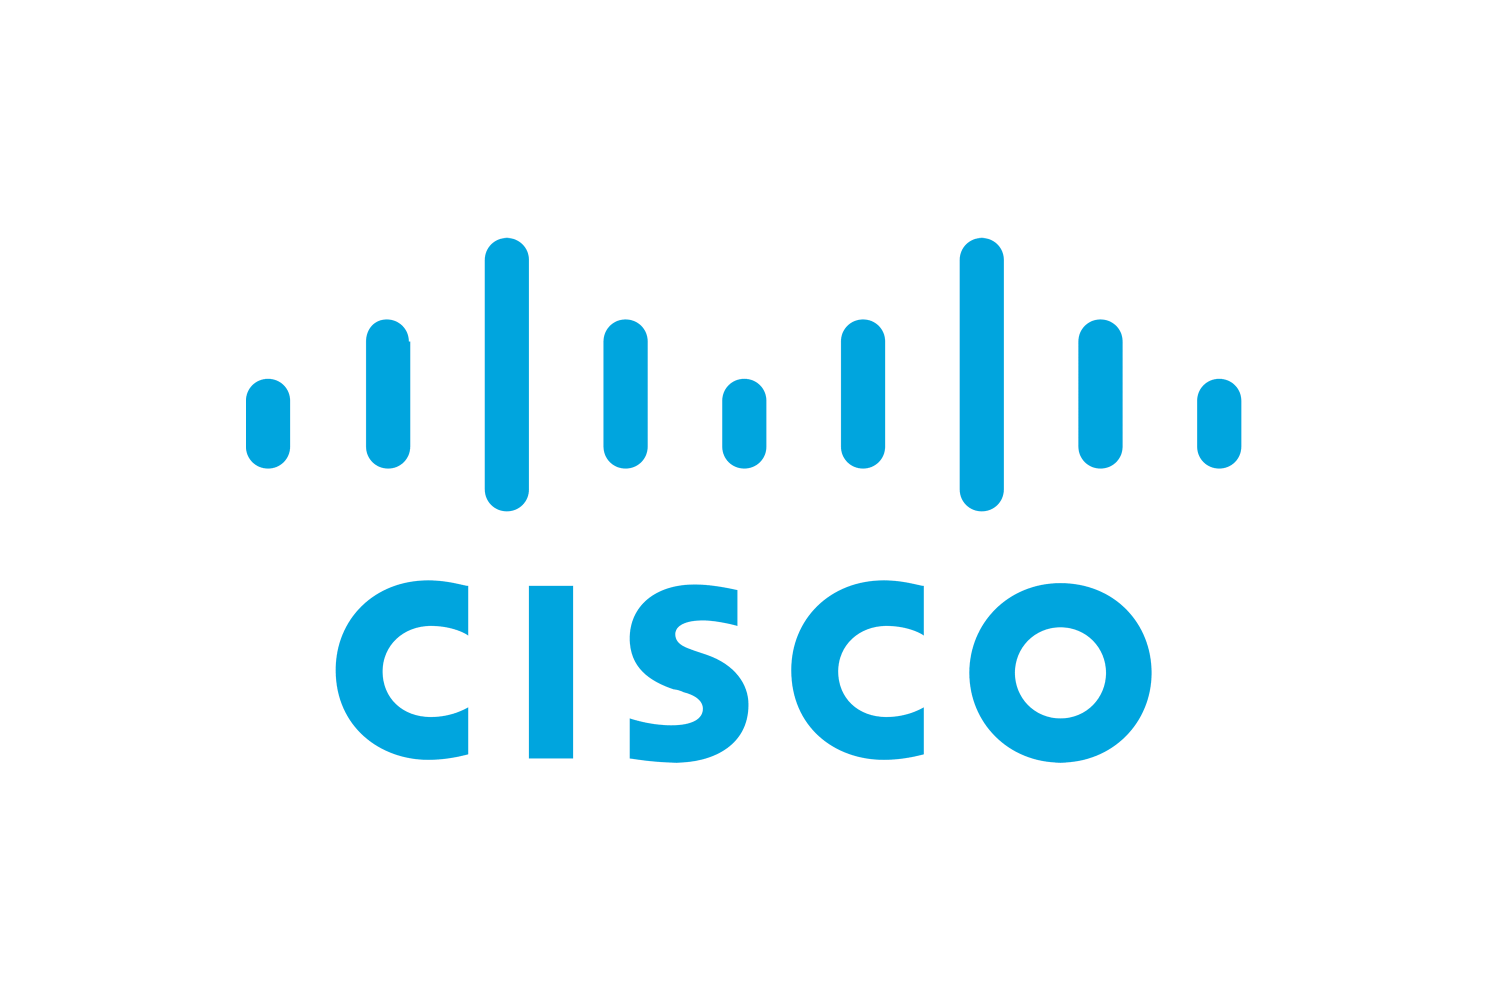 CISCO Cisco-logoS.png